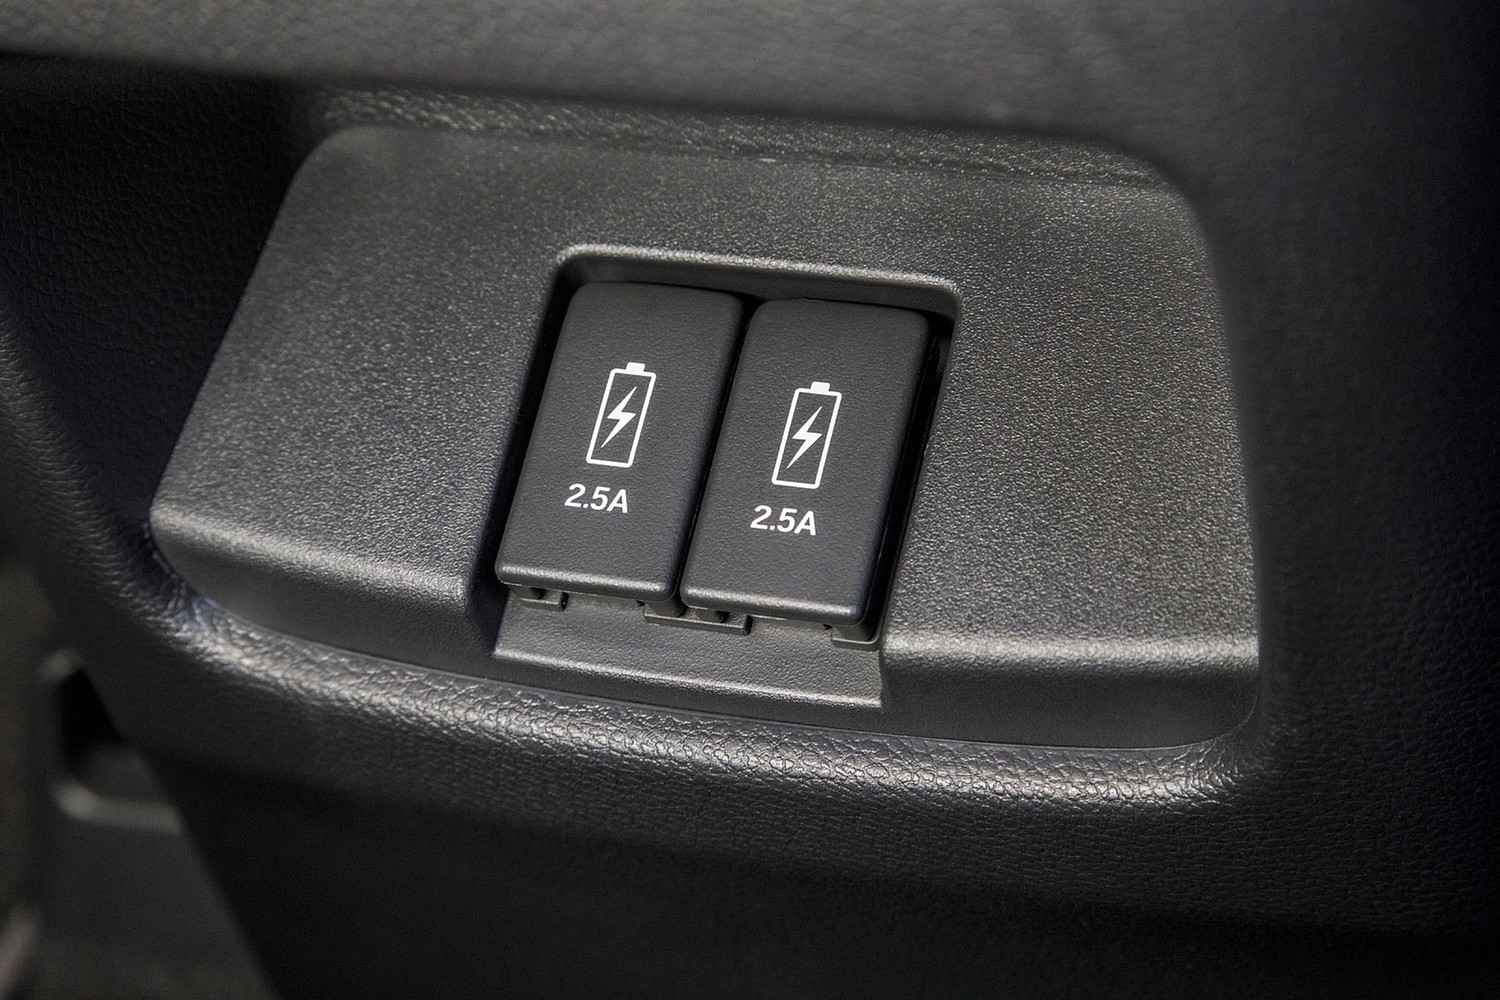 Honda CR-V Touring 4dr SUV Interior Detail (2017 model year shown)